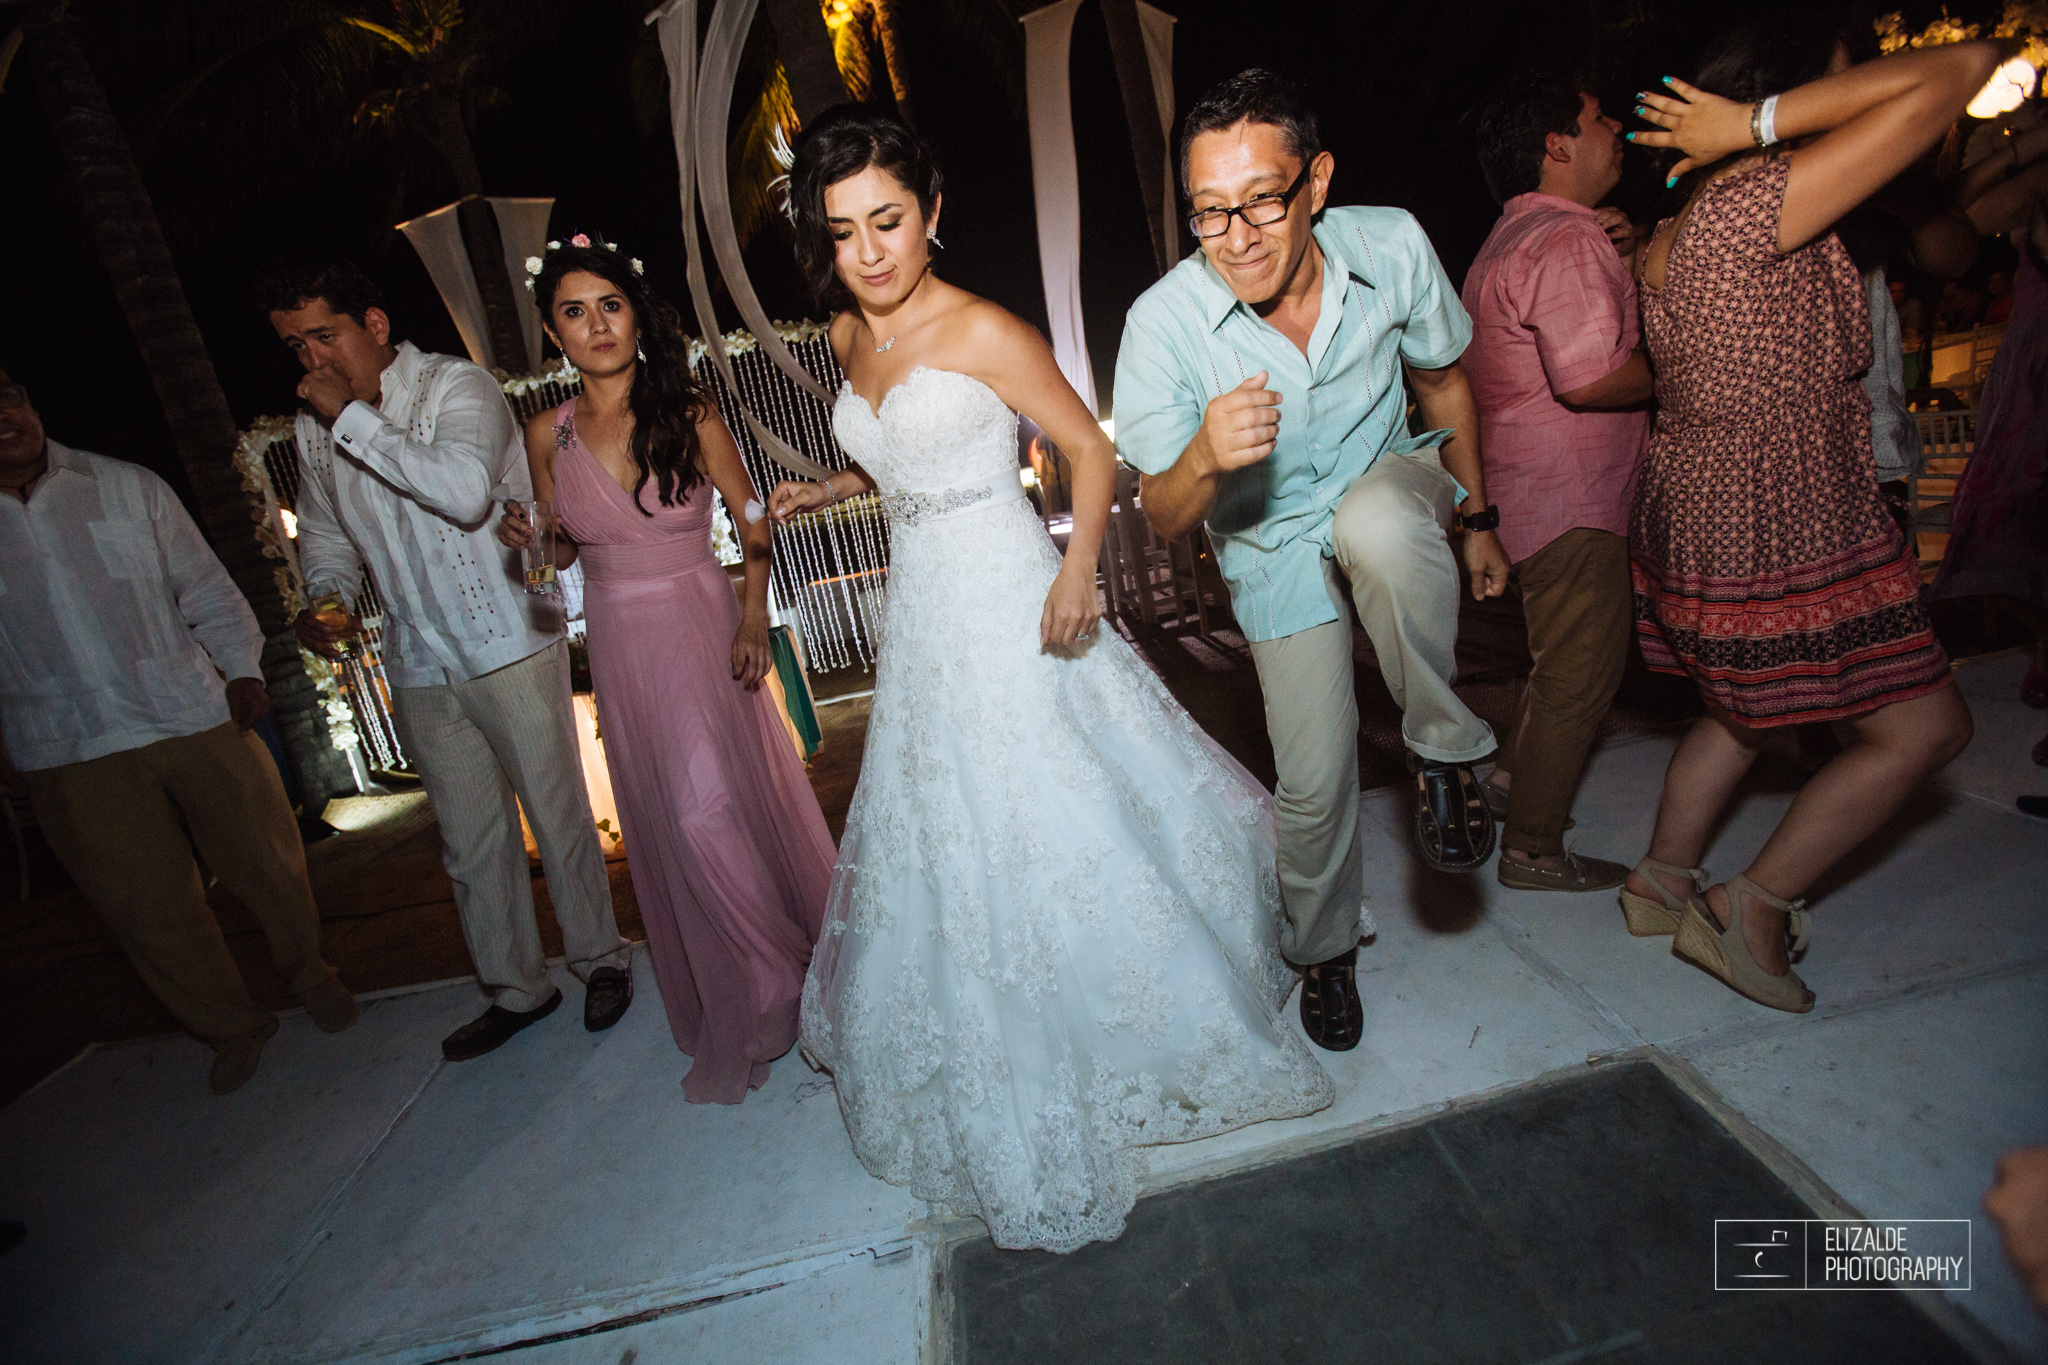 Pay and Ferran_Acapulco_Destination Wedding_Elizalde Photography-133.jpg